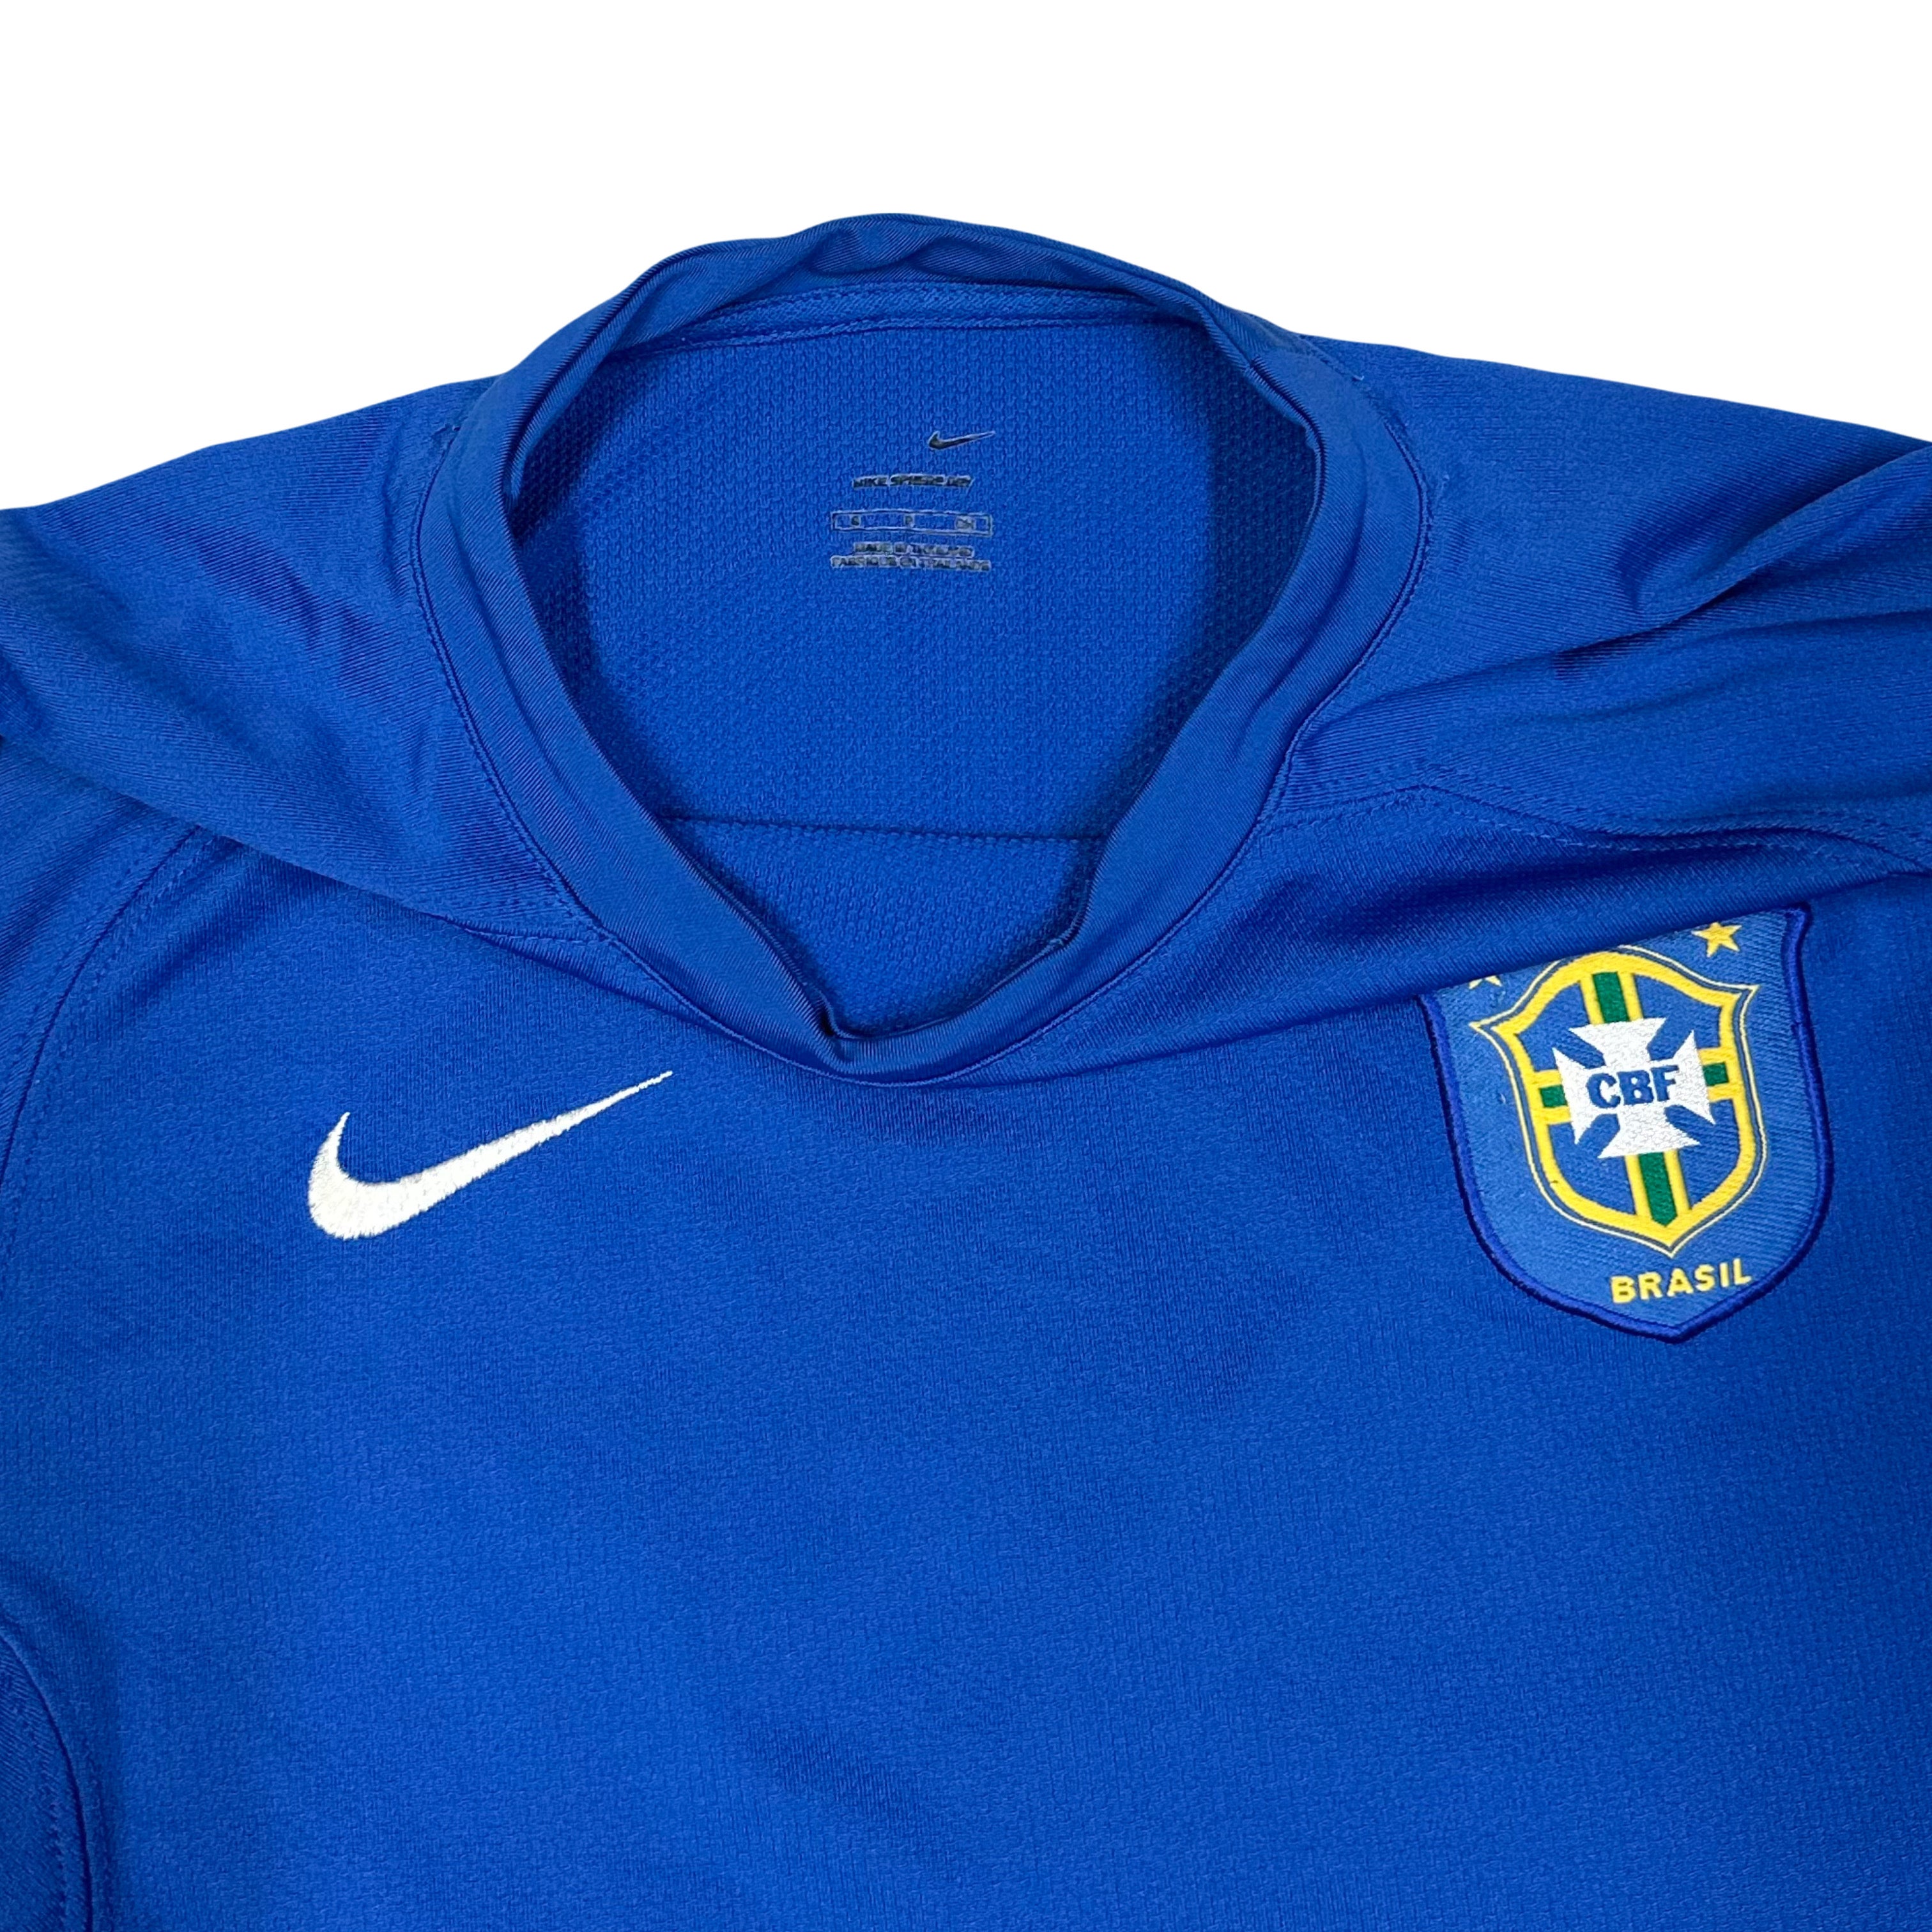 Nike Brazil 2006/07 Shirt In Blue ( S )